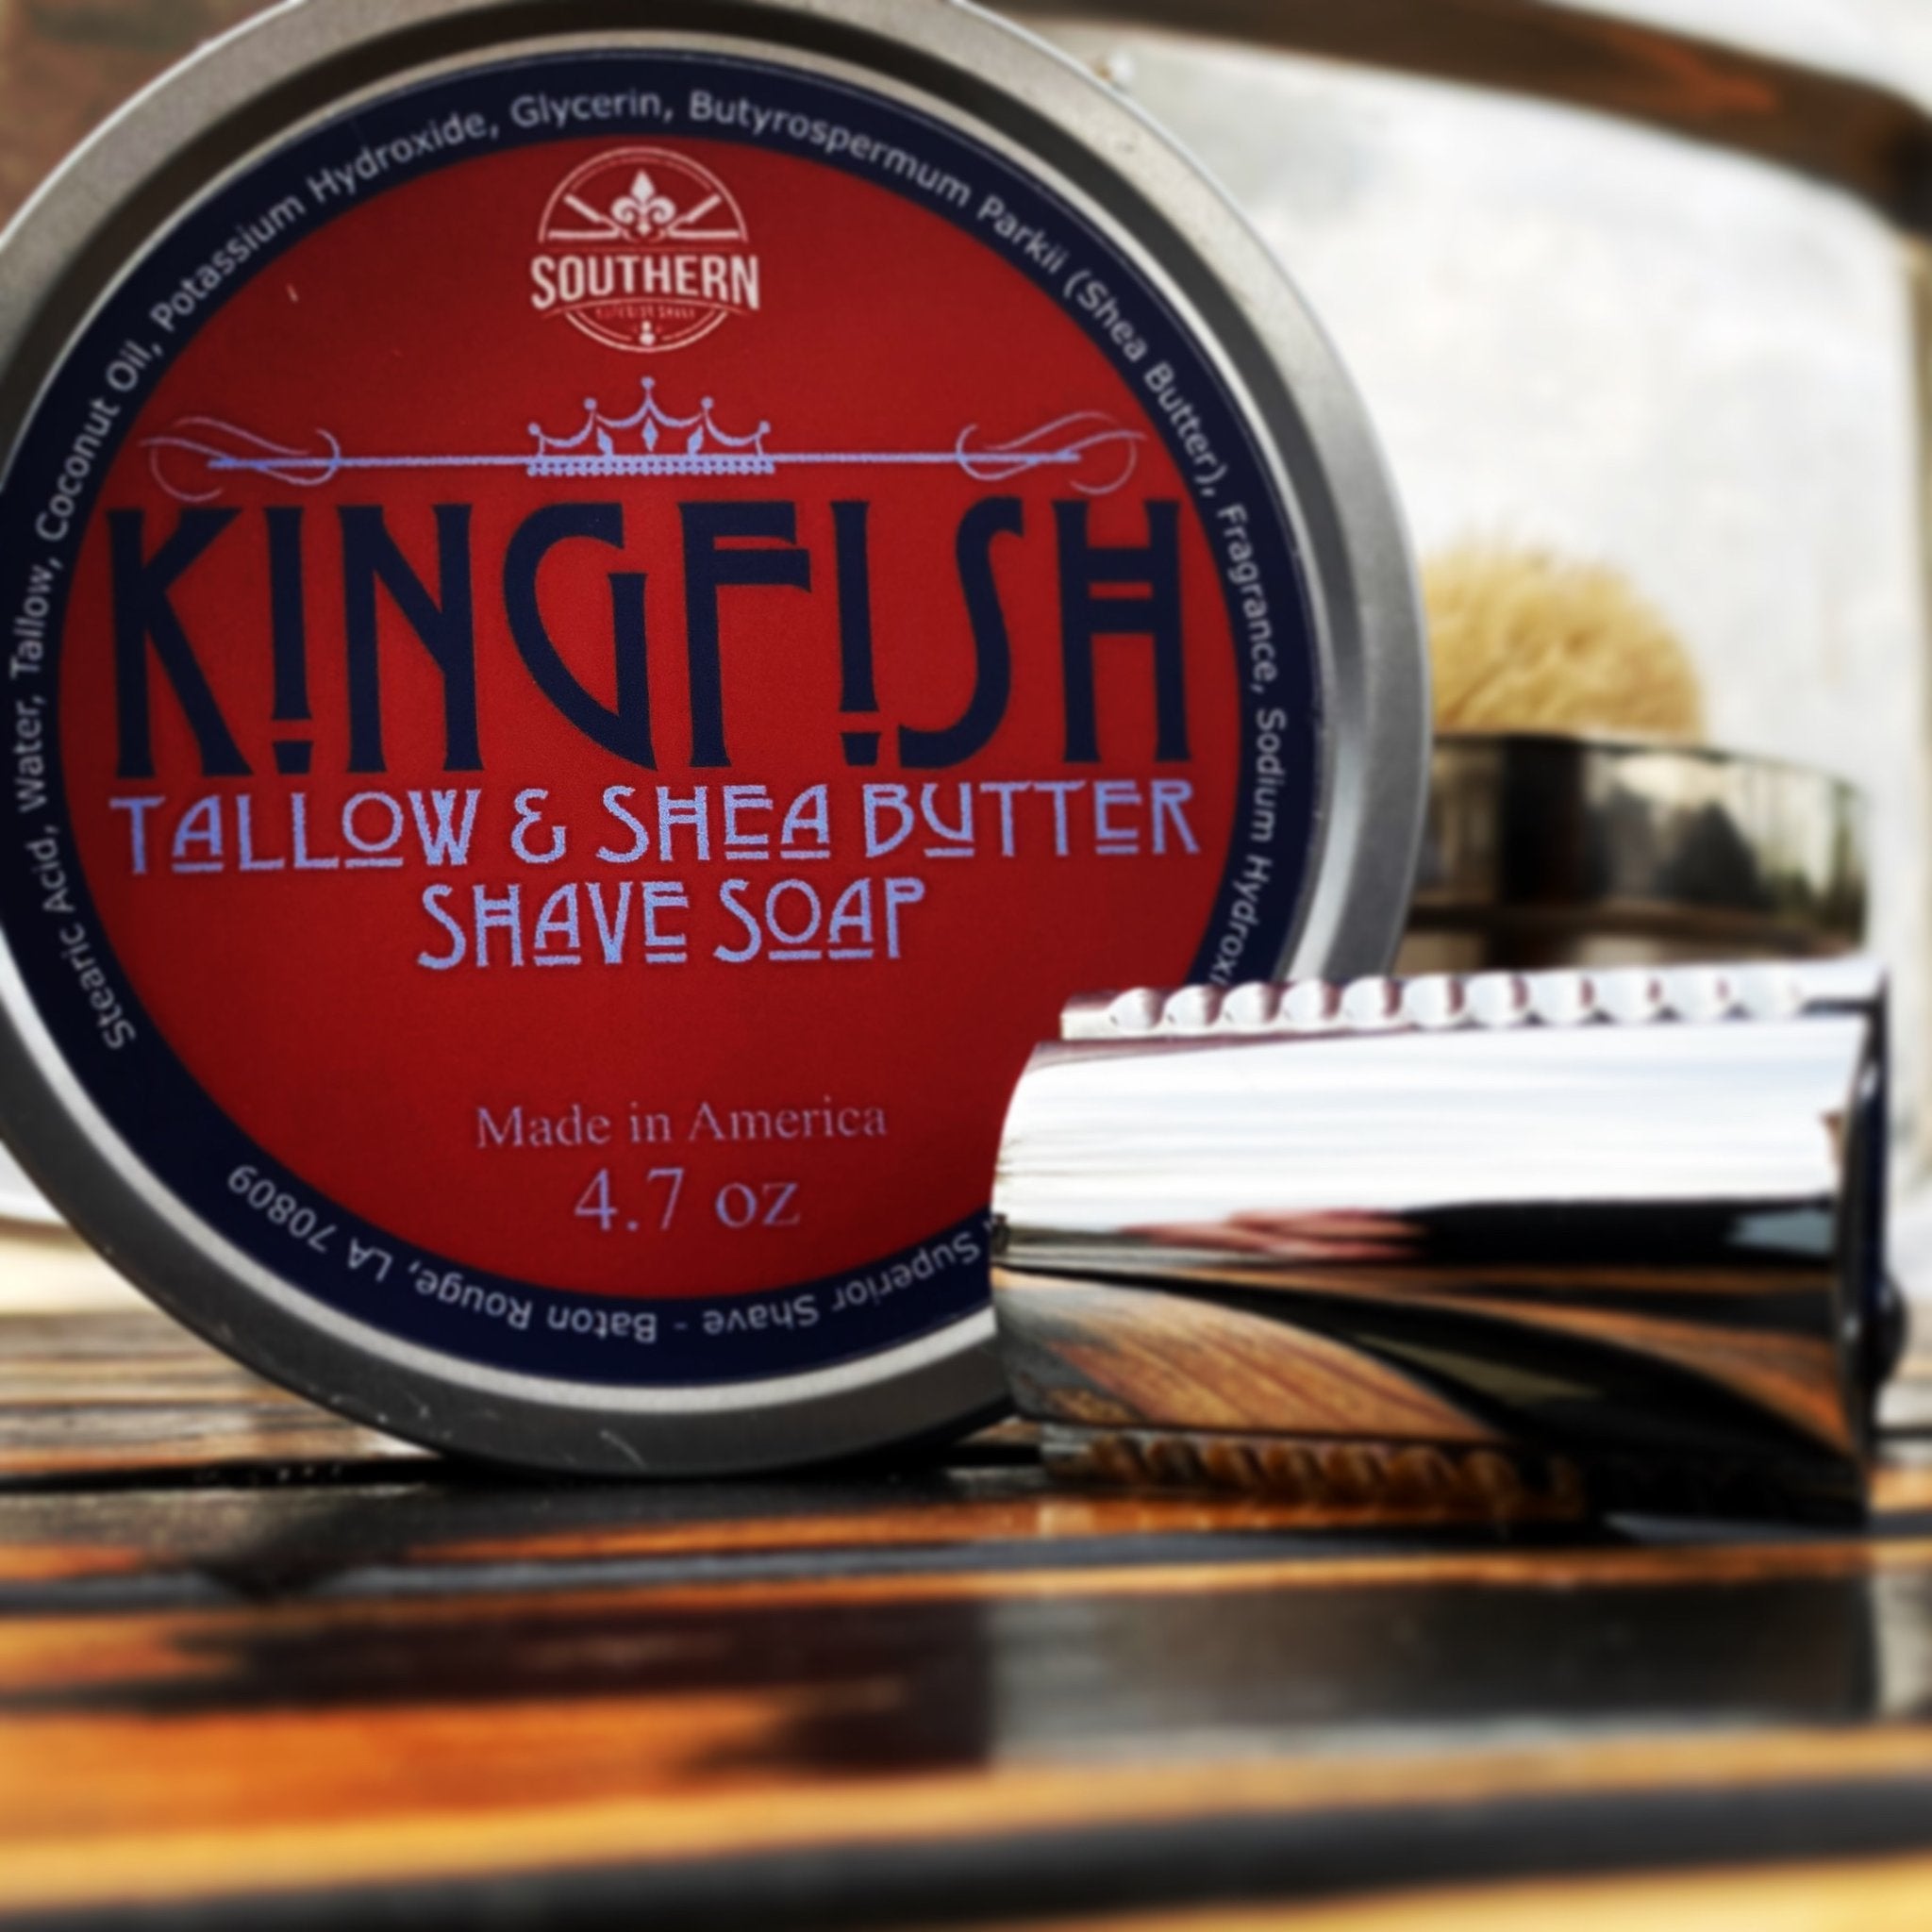 Kingfish Tallow & Shea Butter Shave Soap